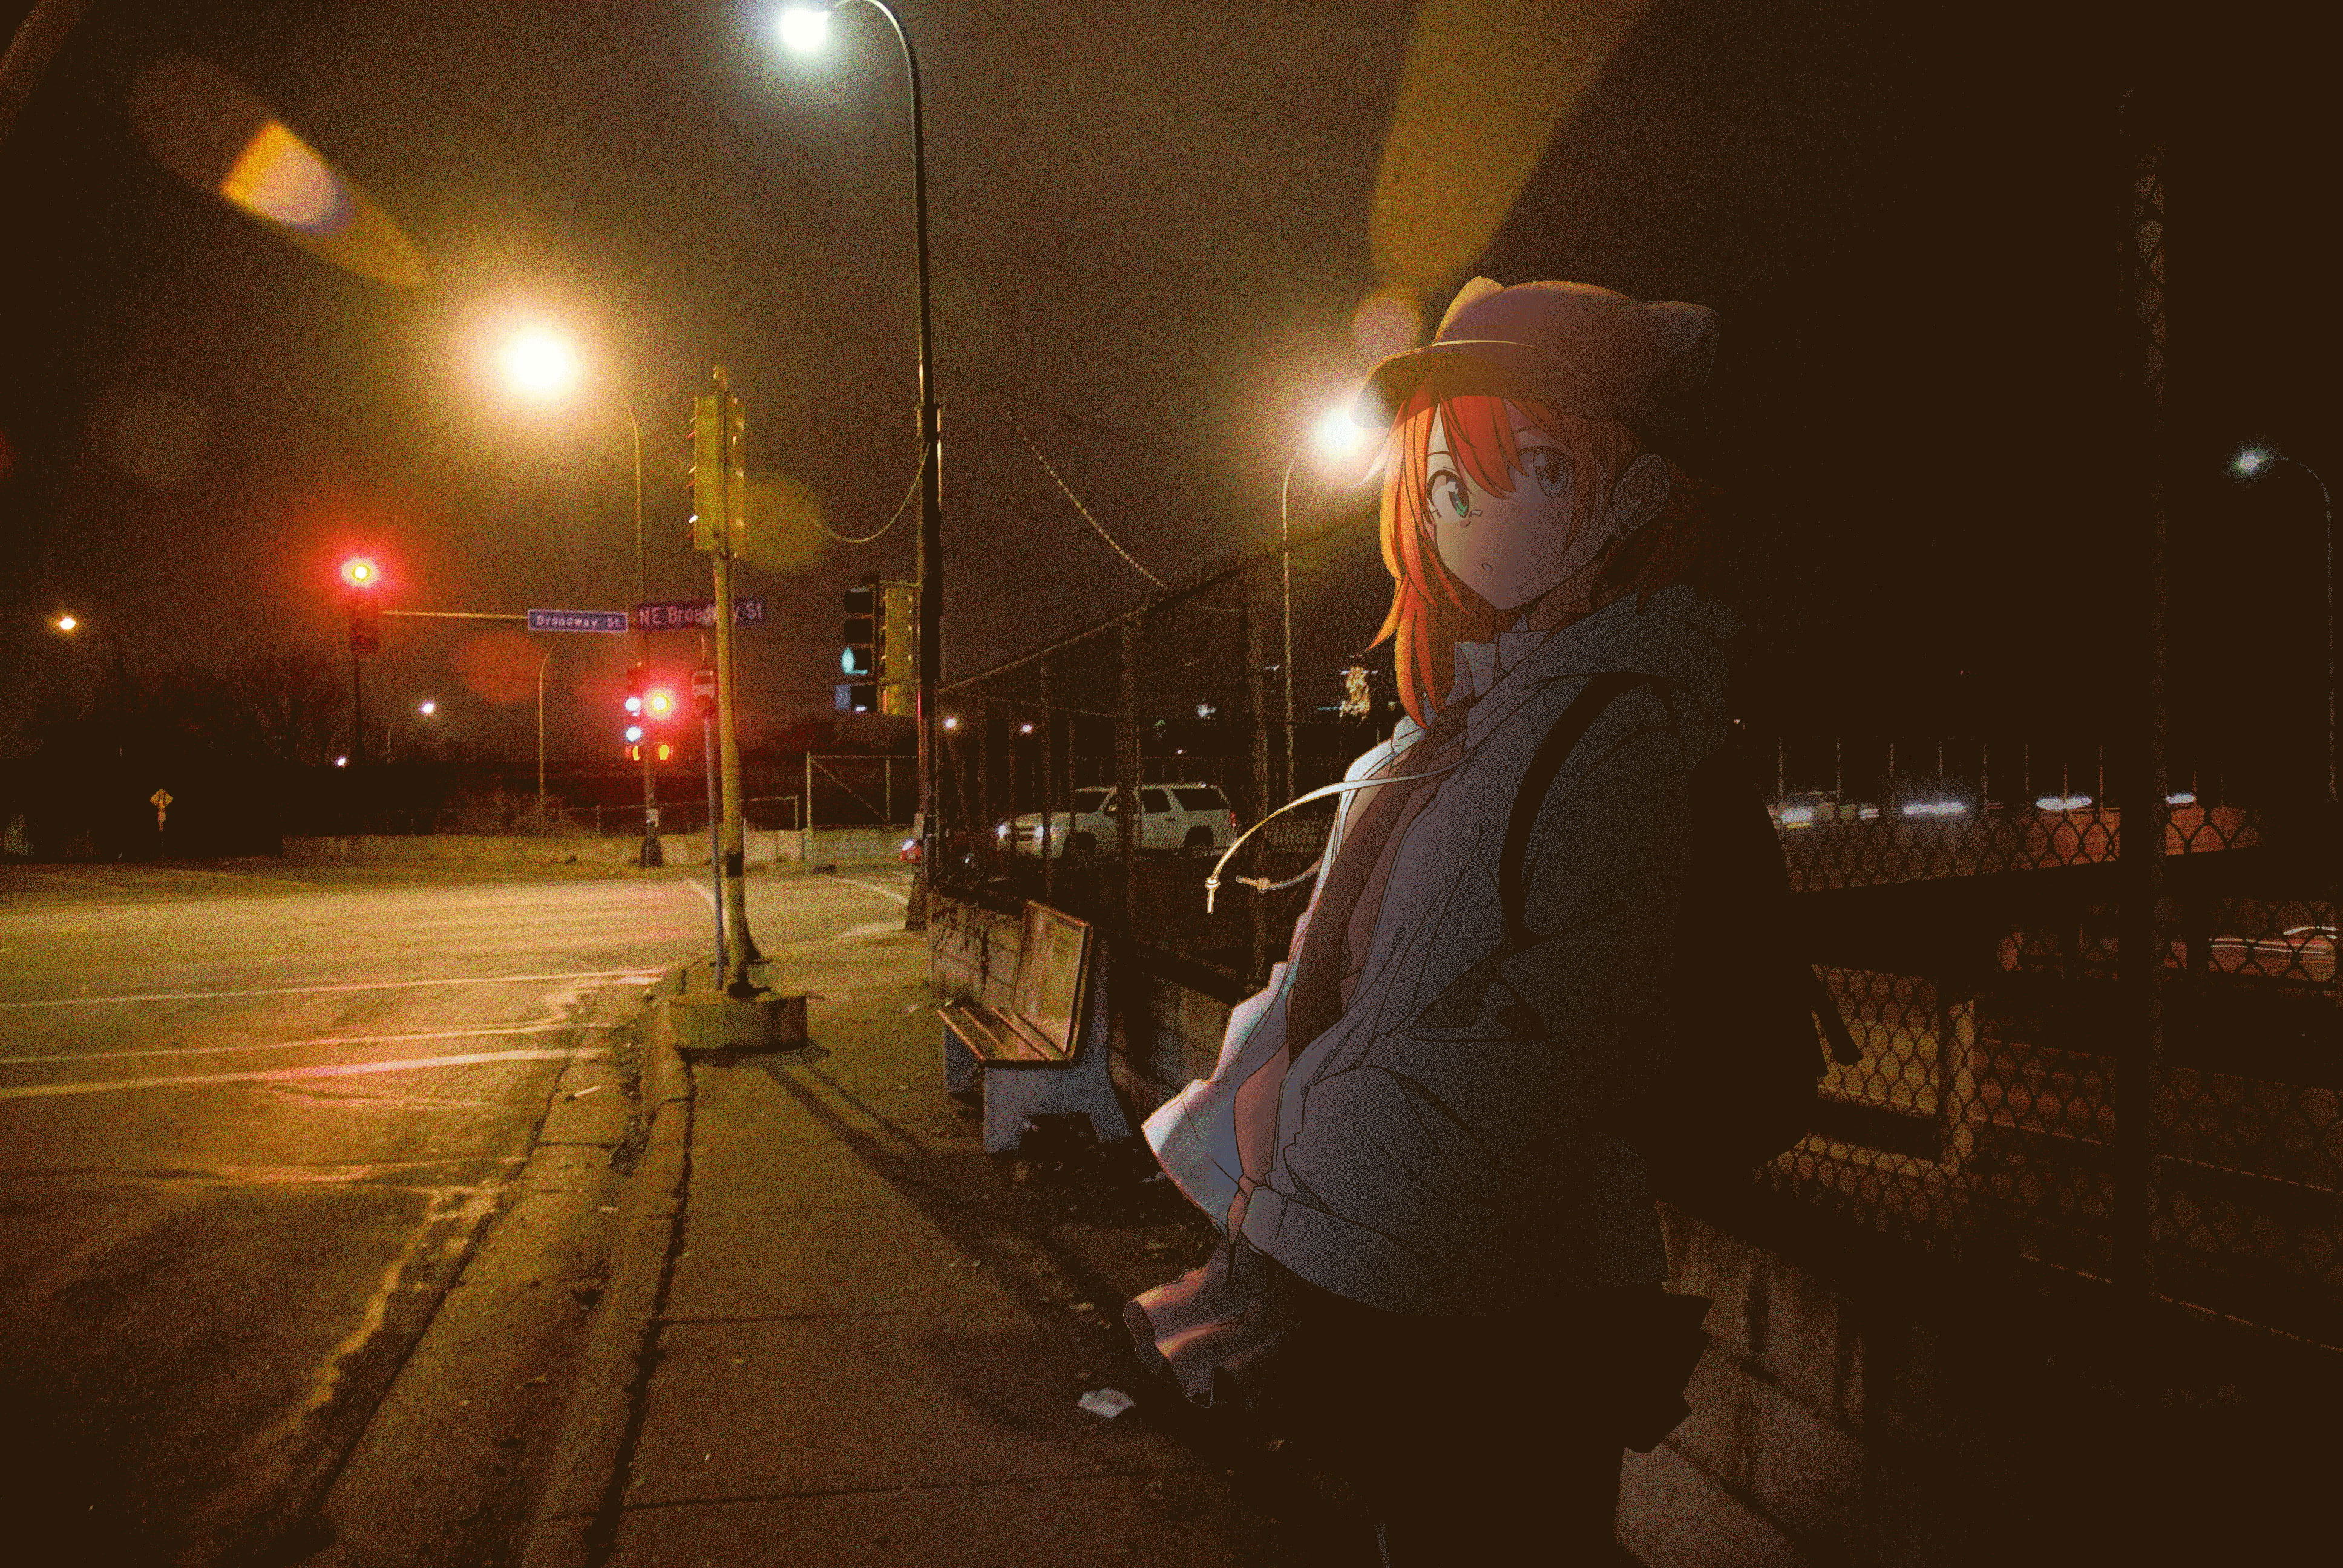 Wallpaper Bus Stations, Anime Girls, Urban, Night, Street, anime, Anime